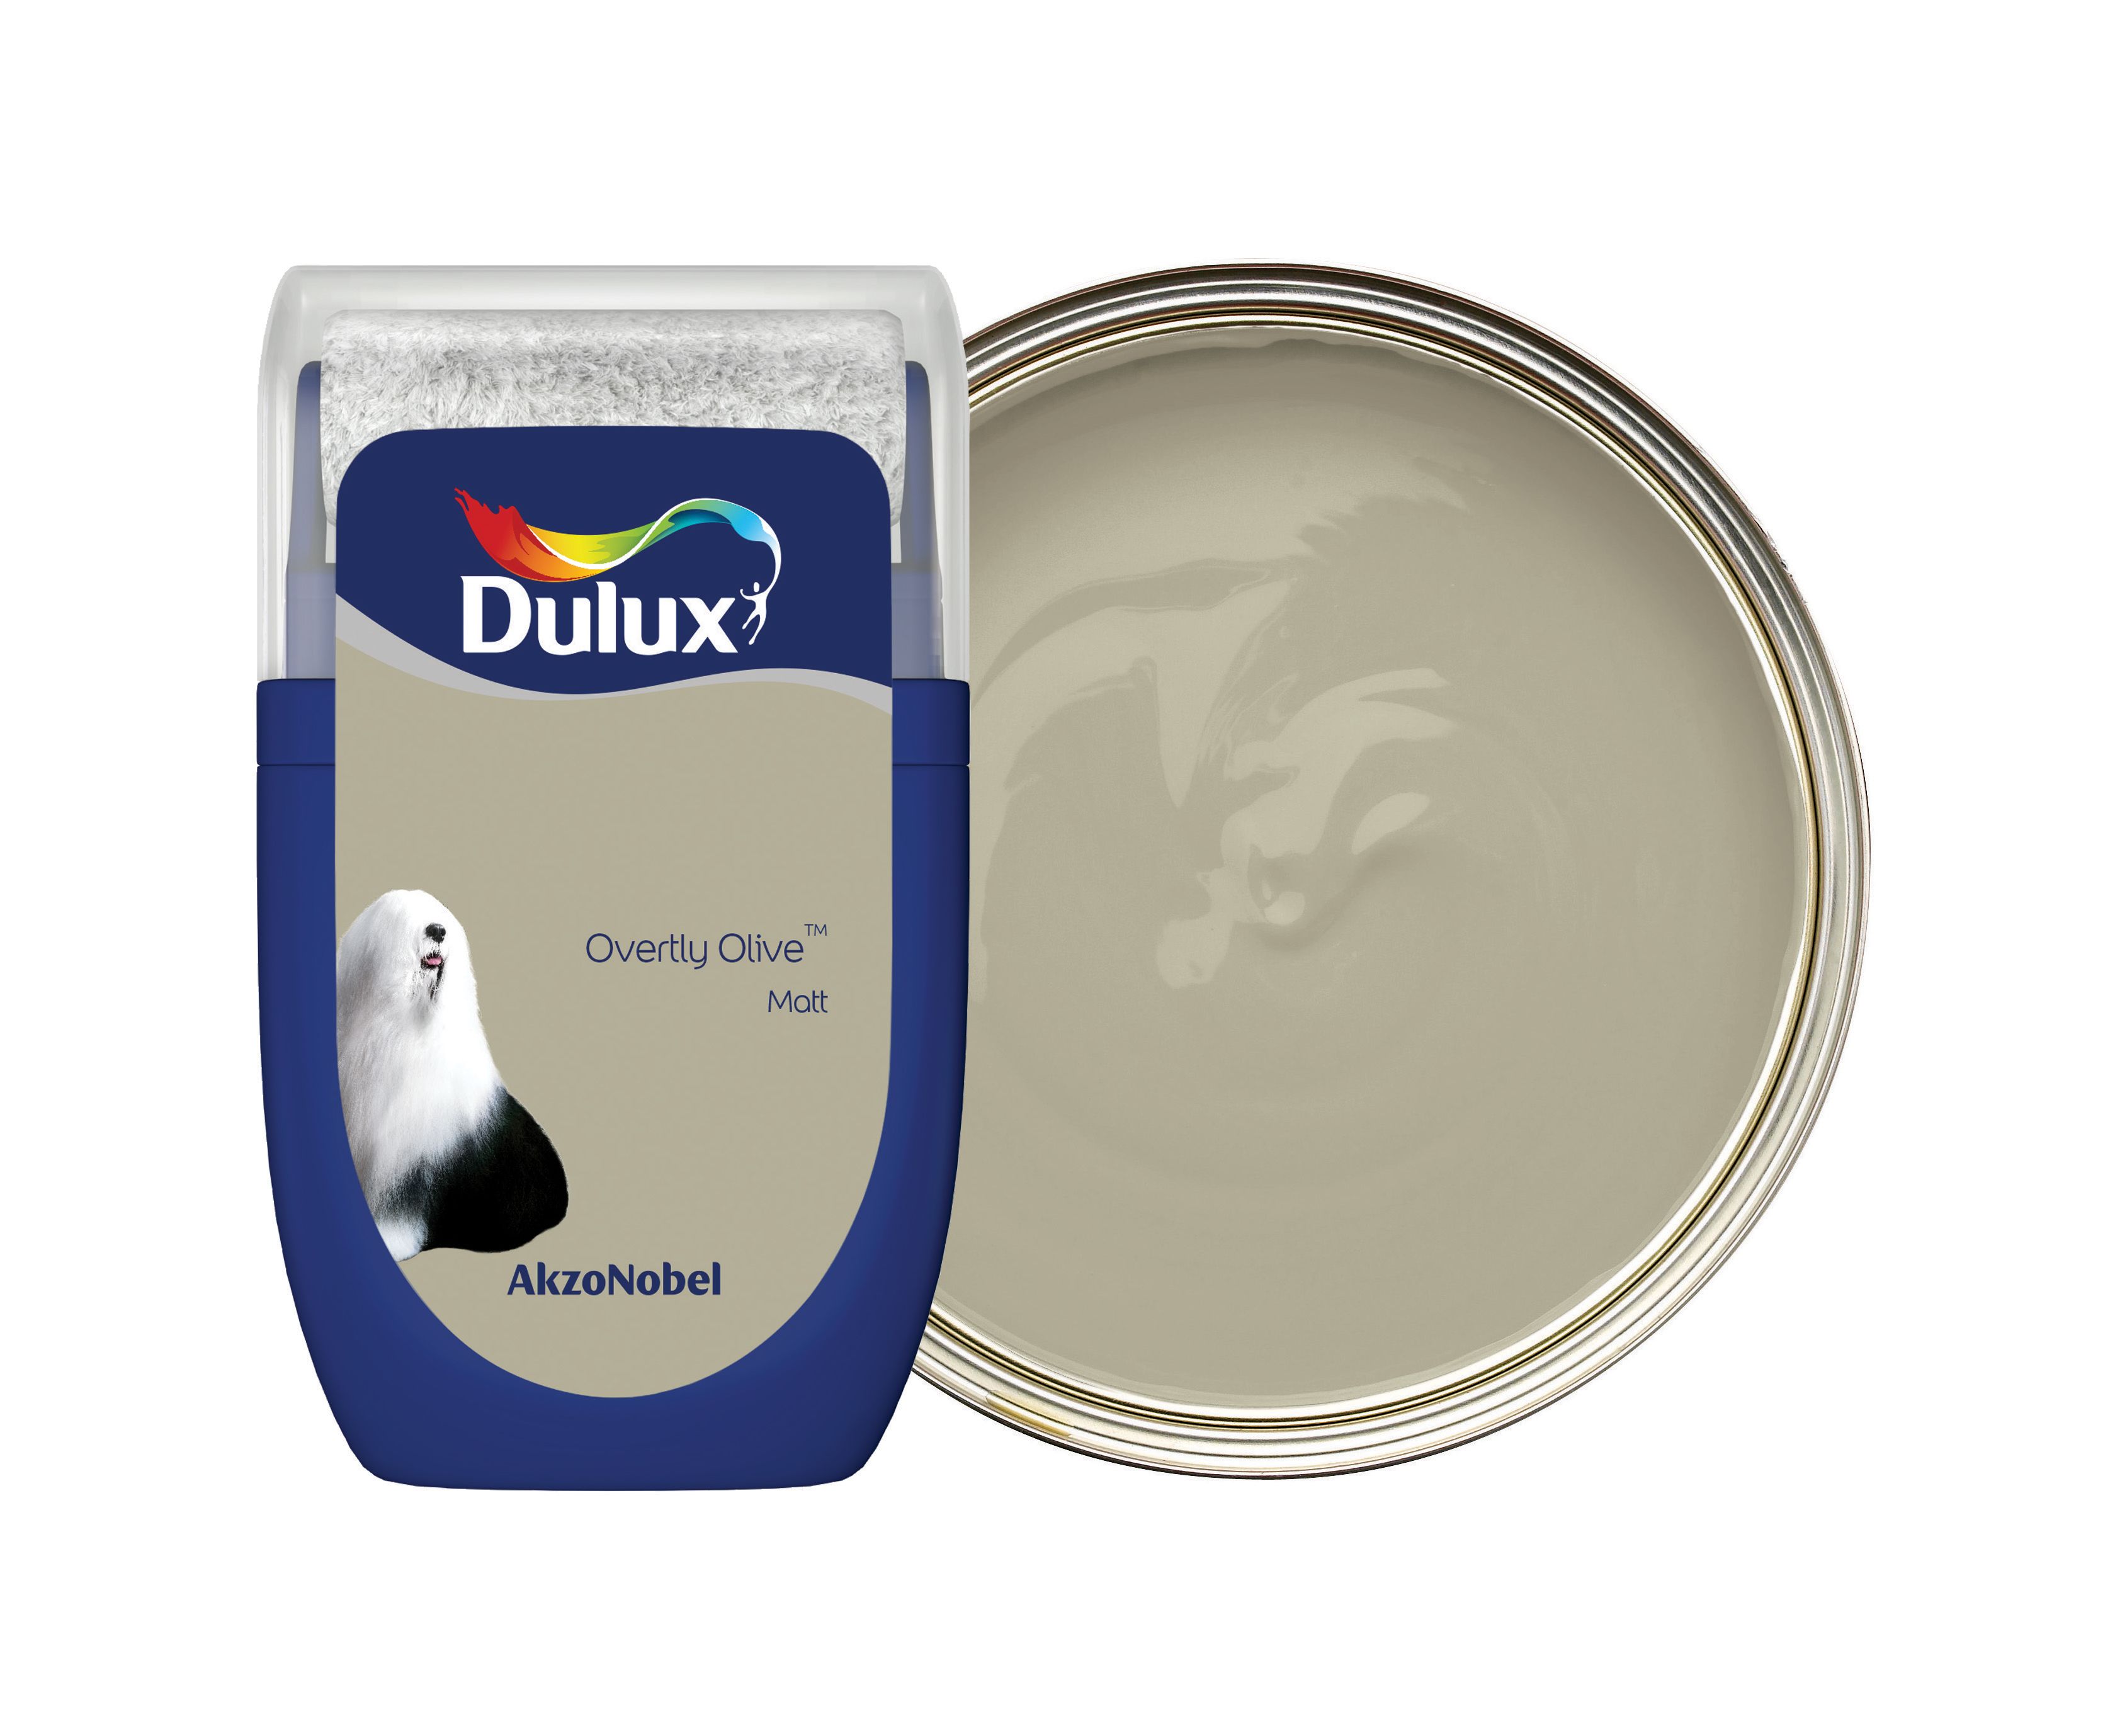 Image of Dulux Emulsion Paint - Overtly Olive Tester Pot - 30ml